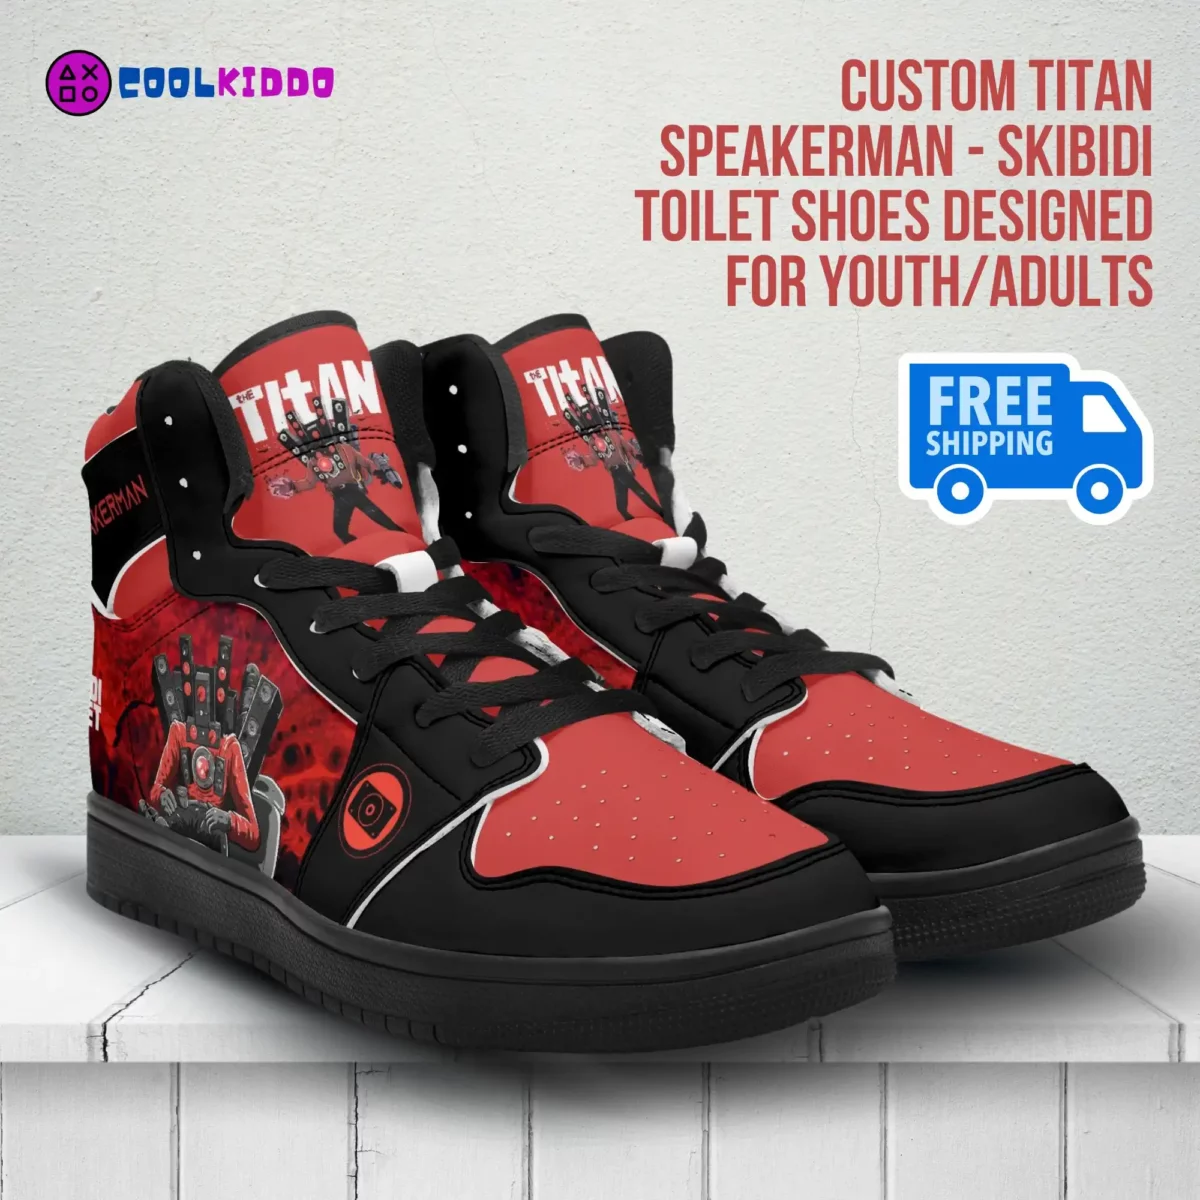 Custom Speaker Man Skibidi Toilet High-Top Leather Black and Red Street Shoes Cool Kiddo 10